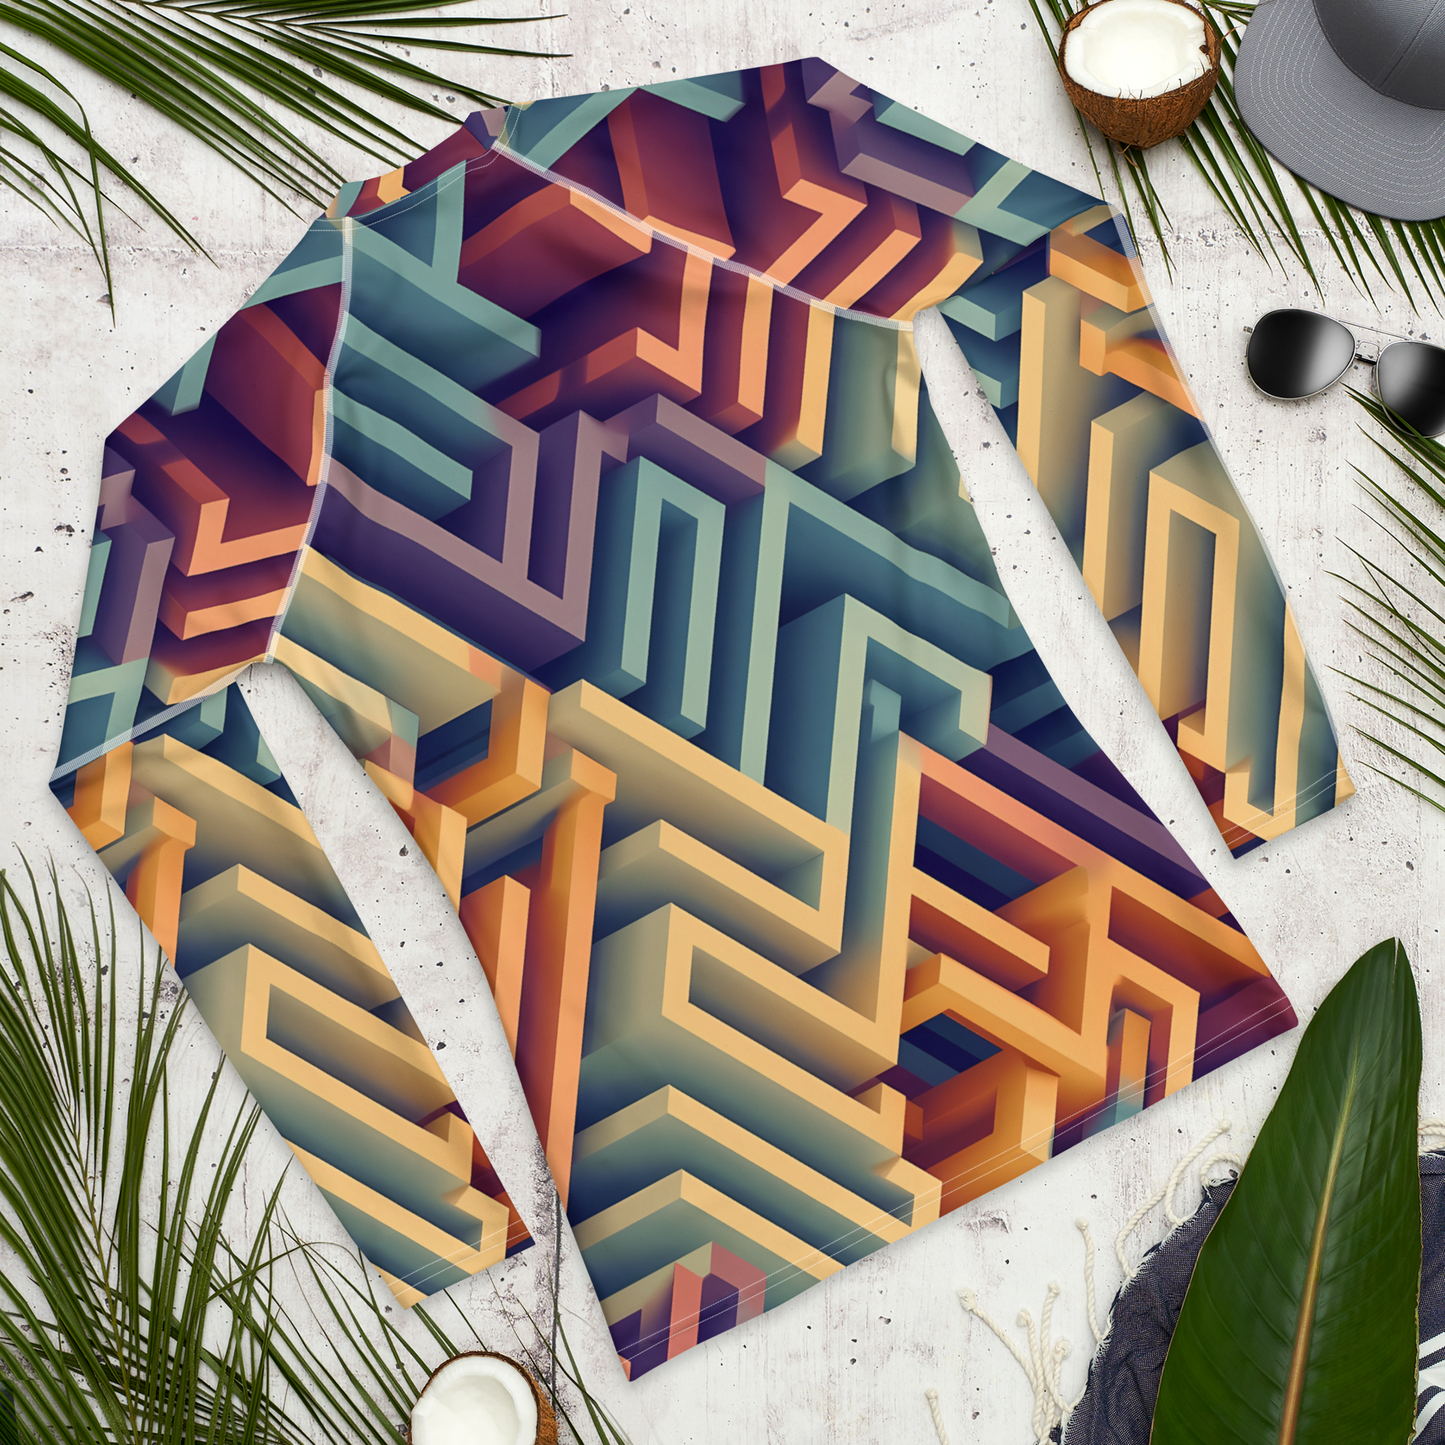 3D Maze Illusion | 3D Patterns | All-Over Print Men's Rash Guard - #3